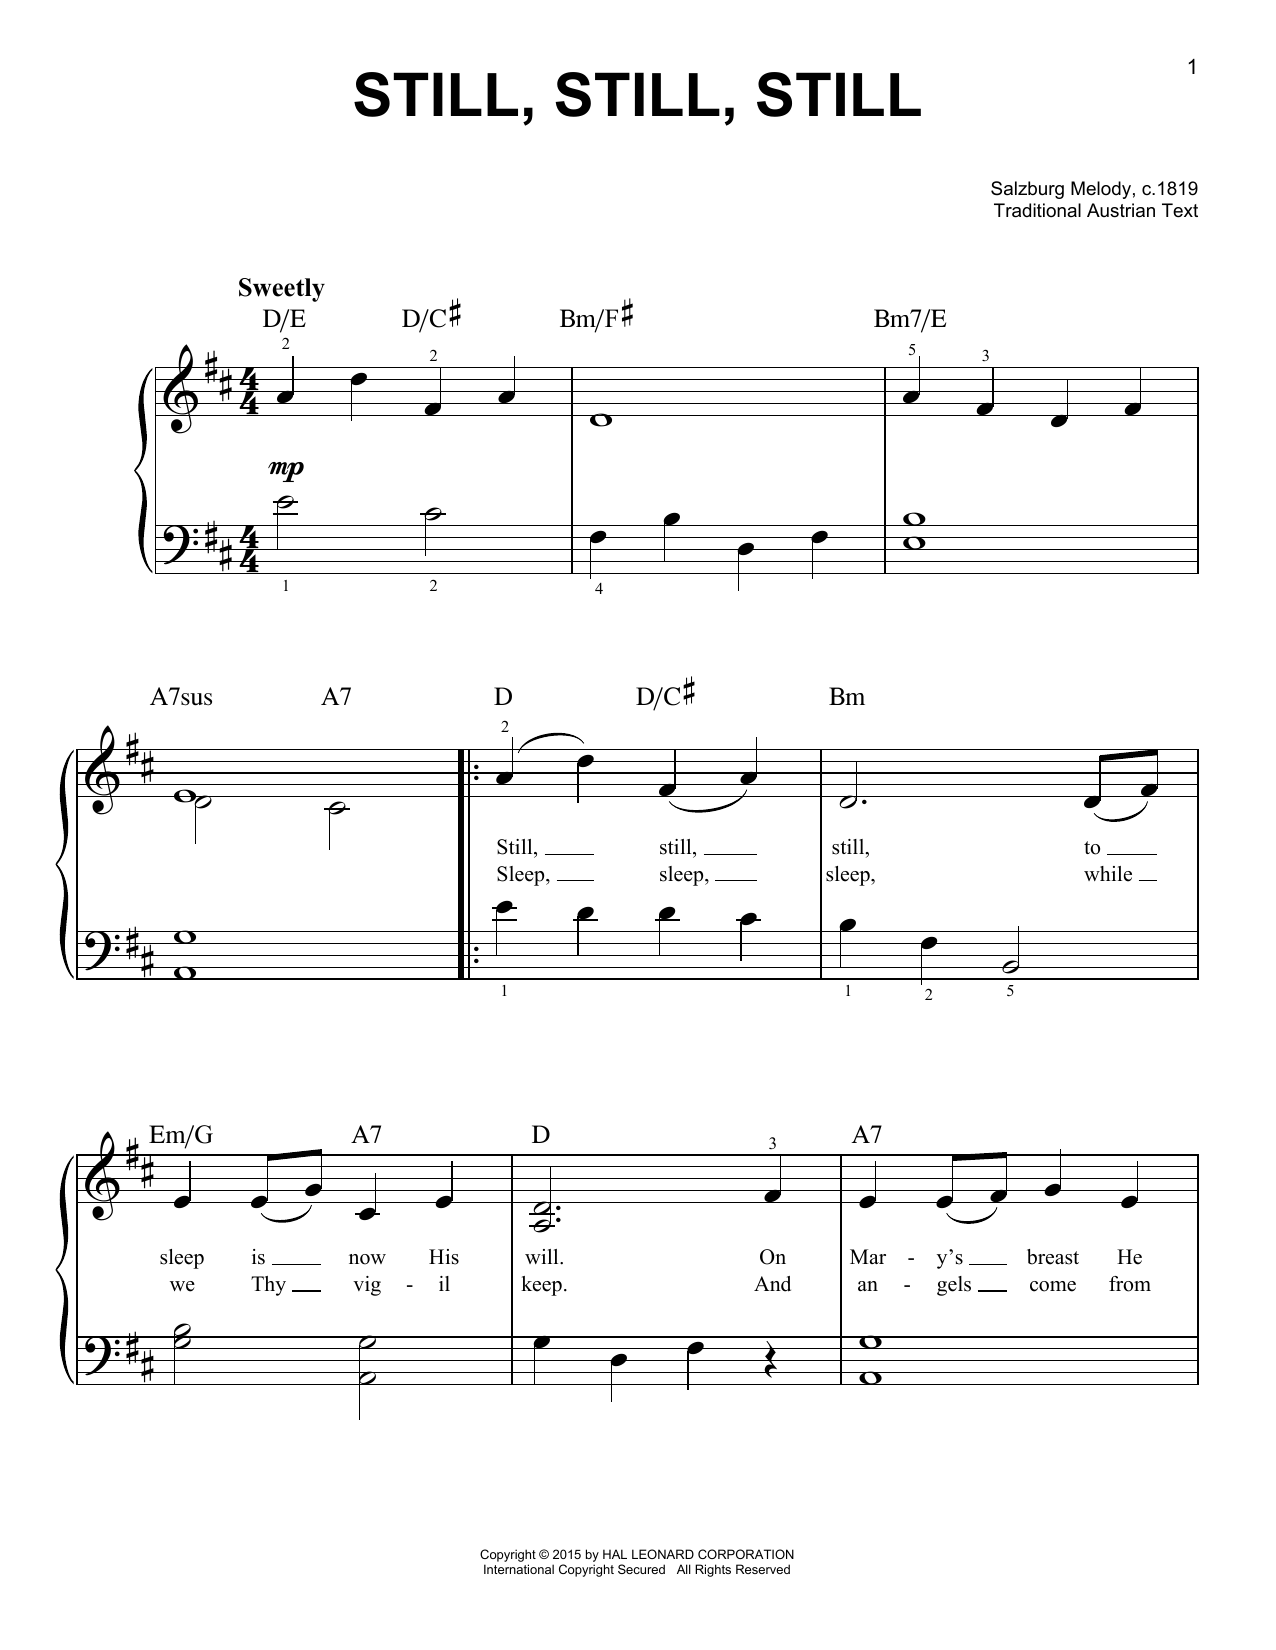 Download Salzburg Melody, c.1819 Still, Still, Still Sheet Music and learn how to play Violin Duet PDF digital score in minutes